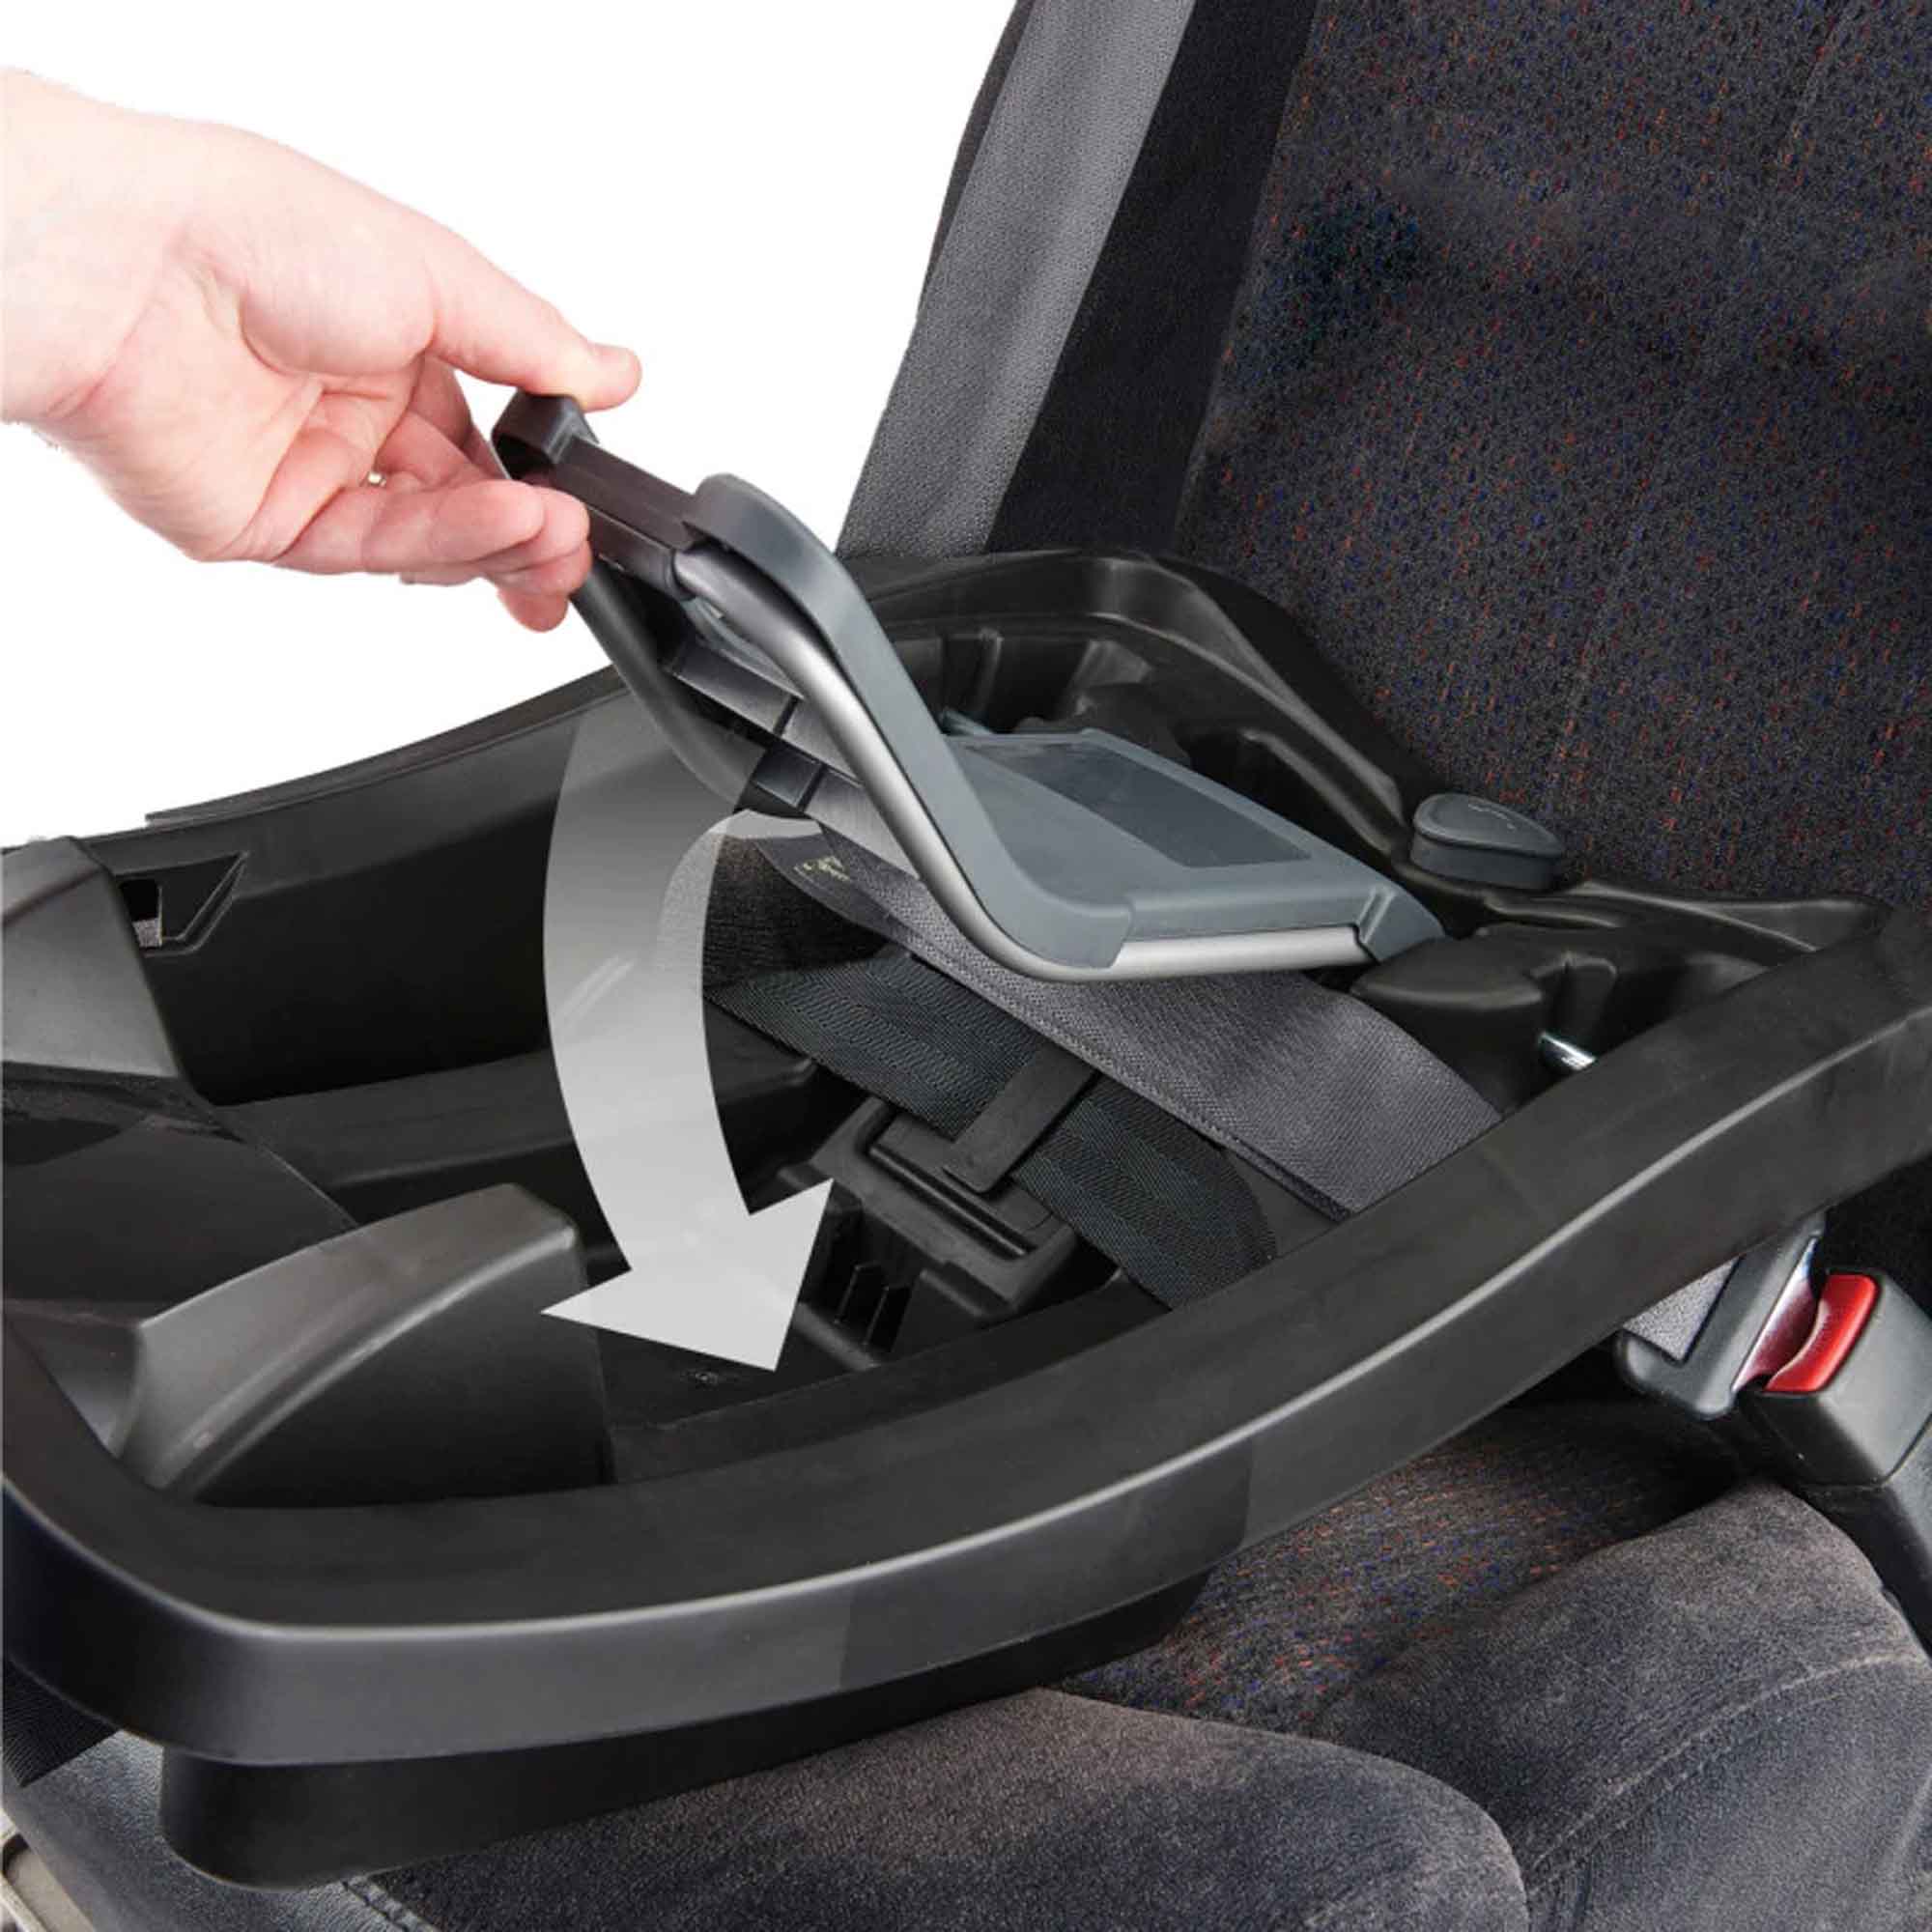 Evenflo LiteMax 35 Infant Car Seat